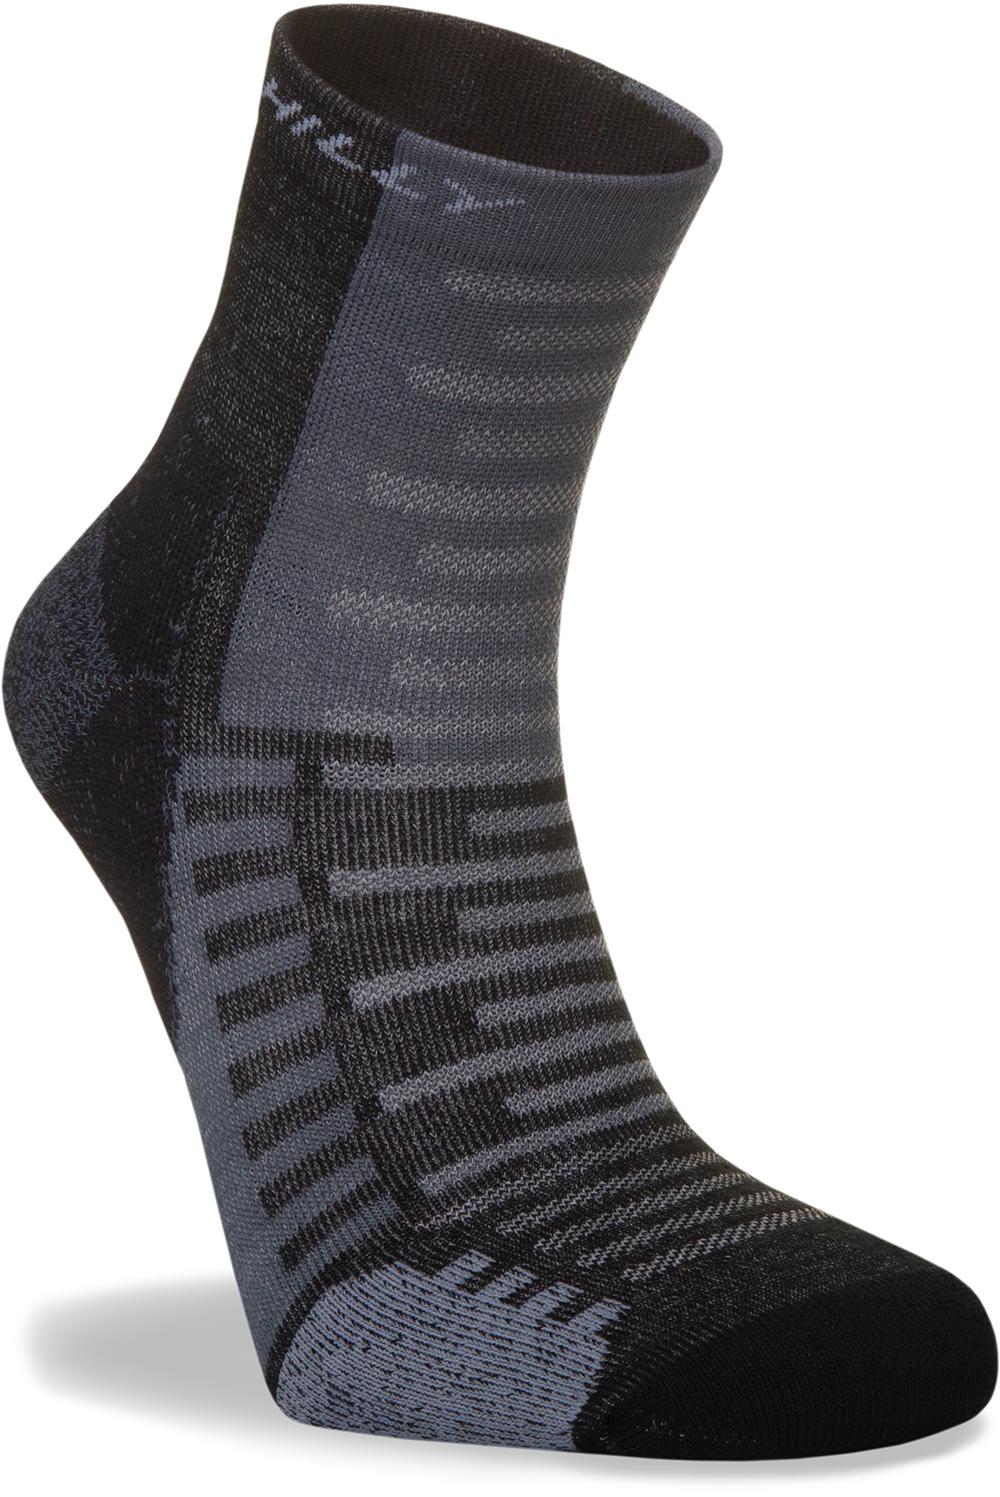 Hilly Active Anklet Minimum Cushioning - Black/grey